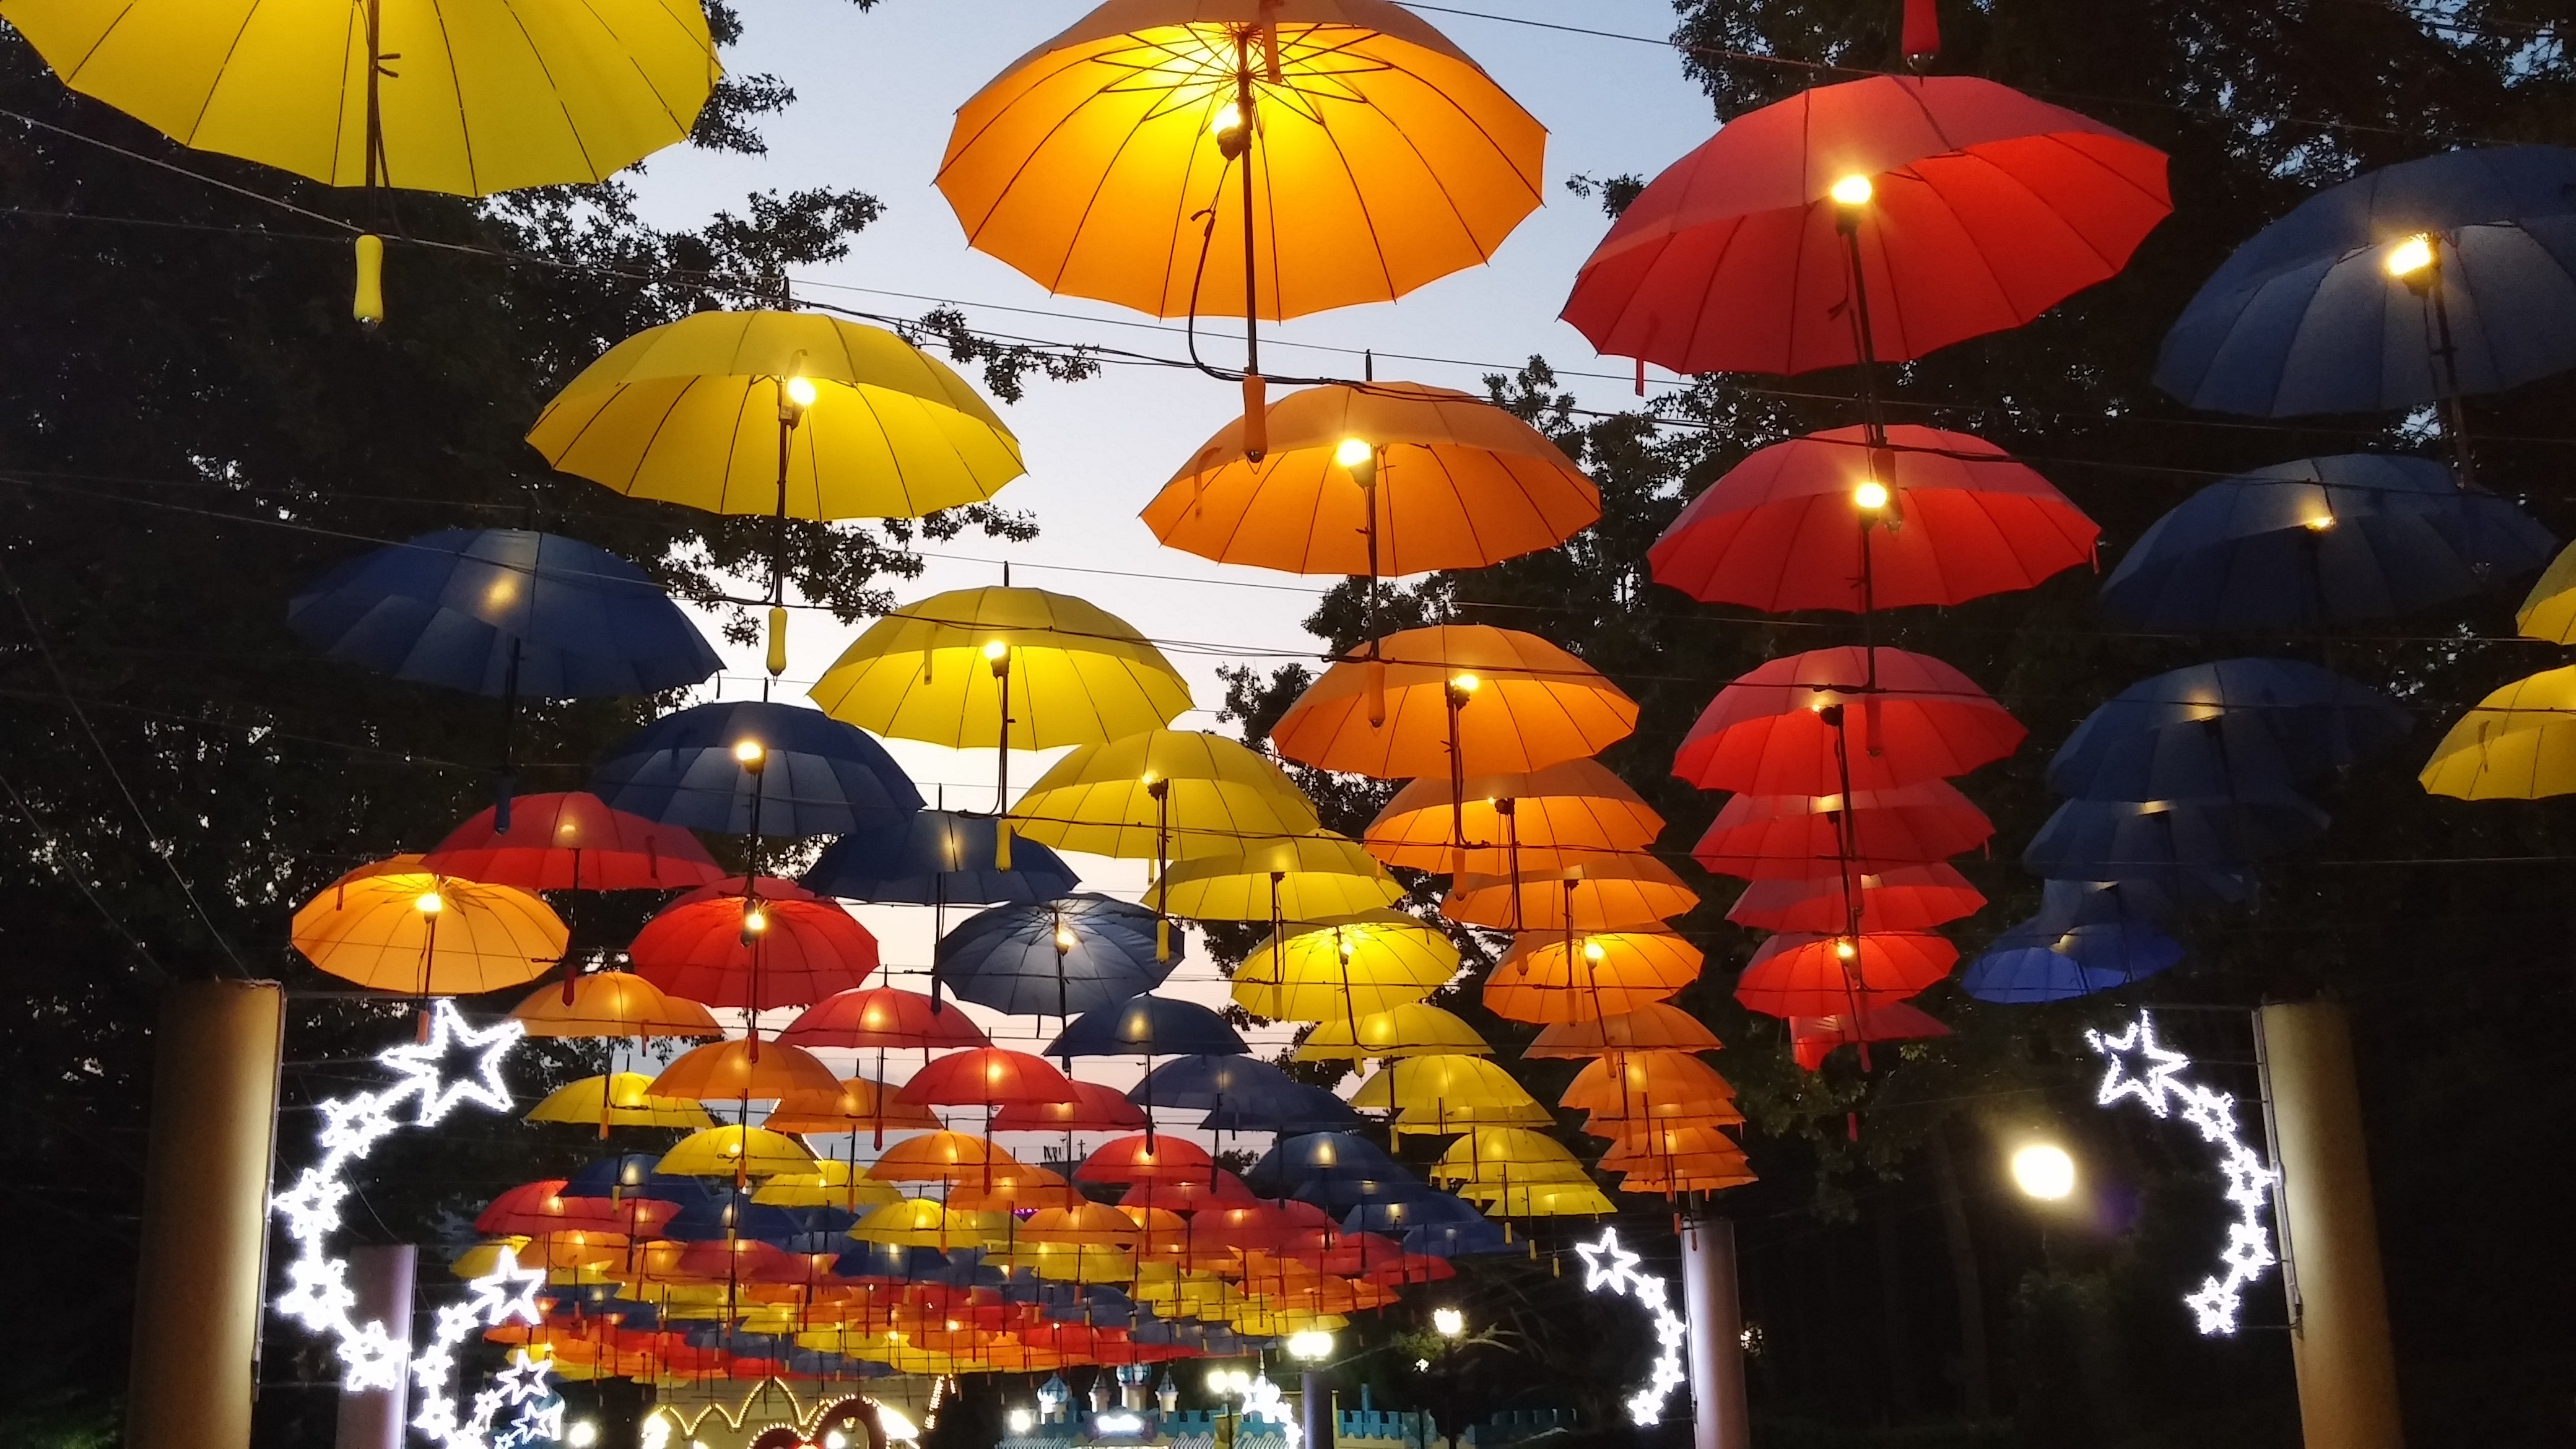 hanged umbrellas with lights